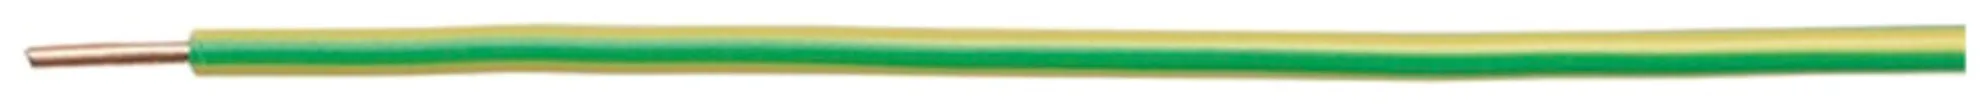 N-Draht H07Z1-U halogenfrei 1.5mm² 450/750V gelb-grün Cca 